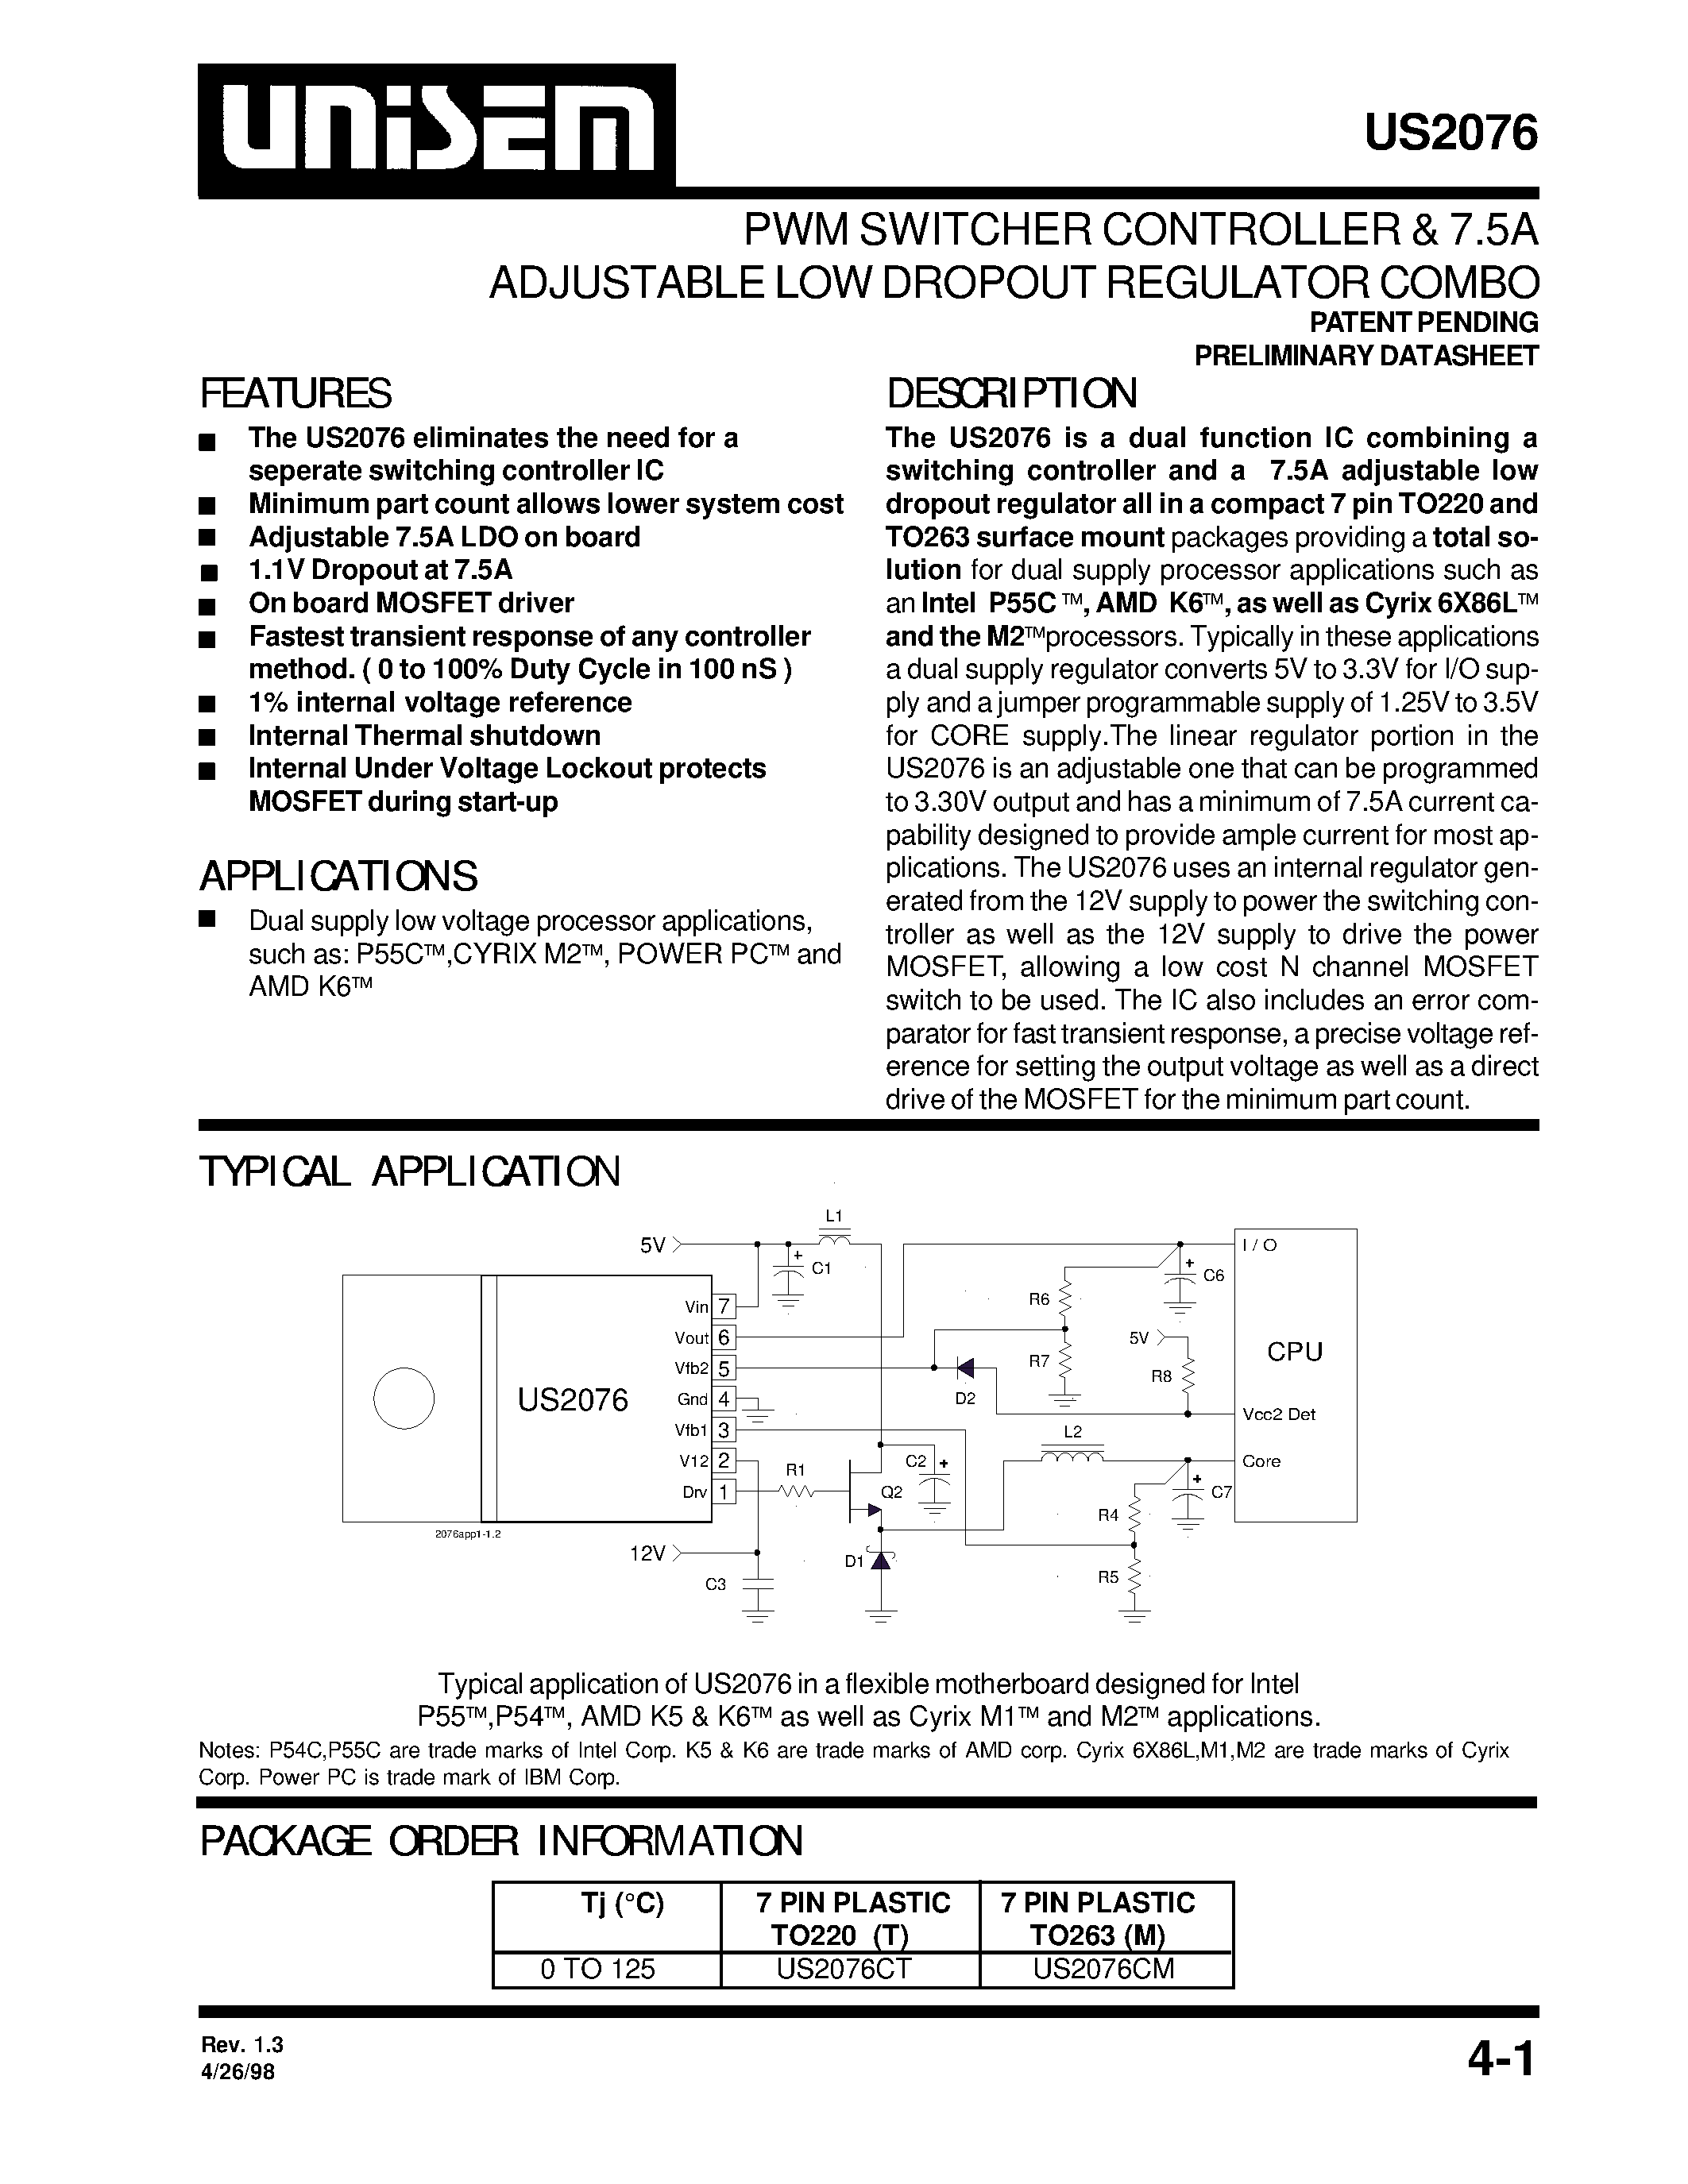 Даташит US2076CM - PWM SWITCHER CONTROLLER & 7.5A ADJUSTABLE LOW DROPOUT REGULATOR COMBO страница 1